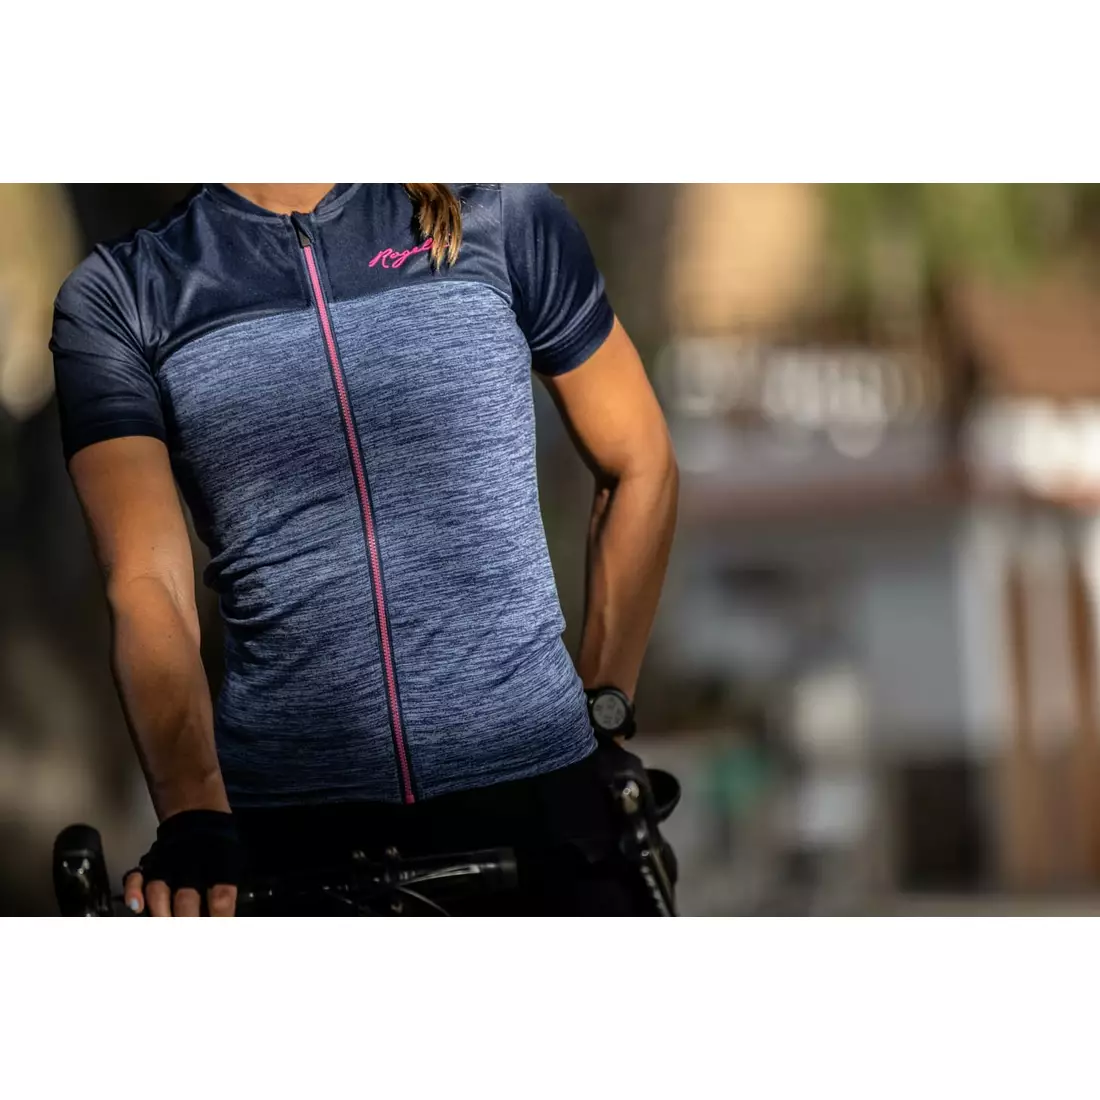 Rogelli MELANGE damska koszulka rowerowa, granatowo-różowa